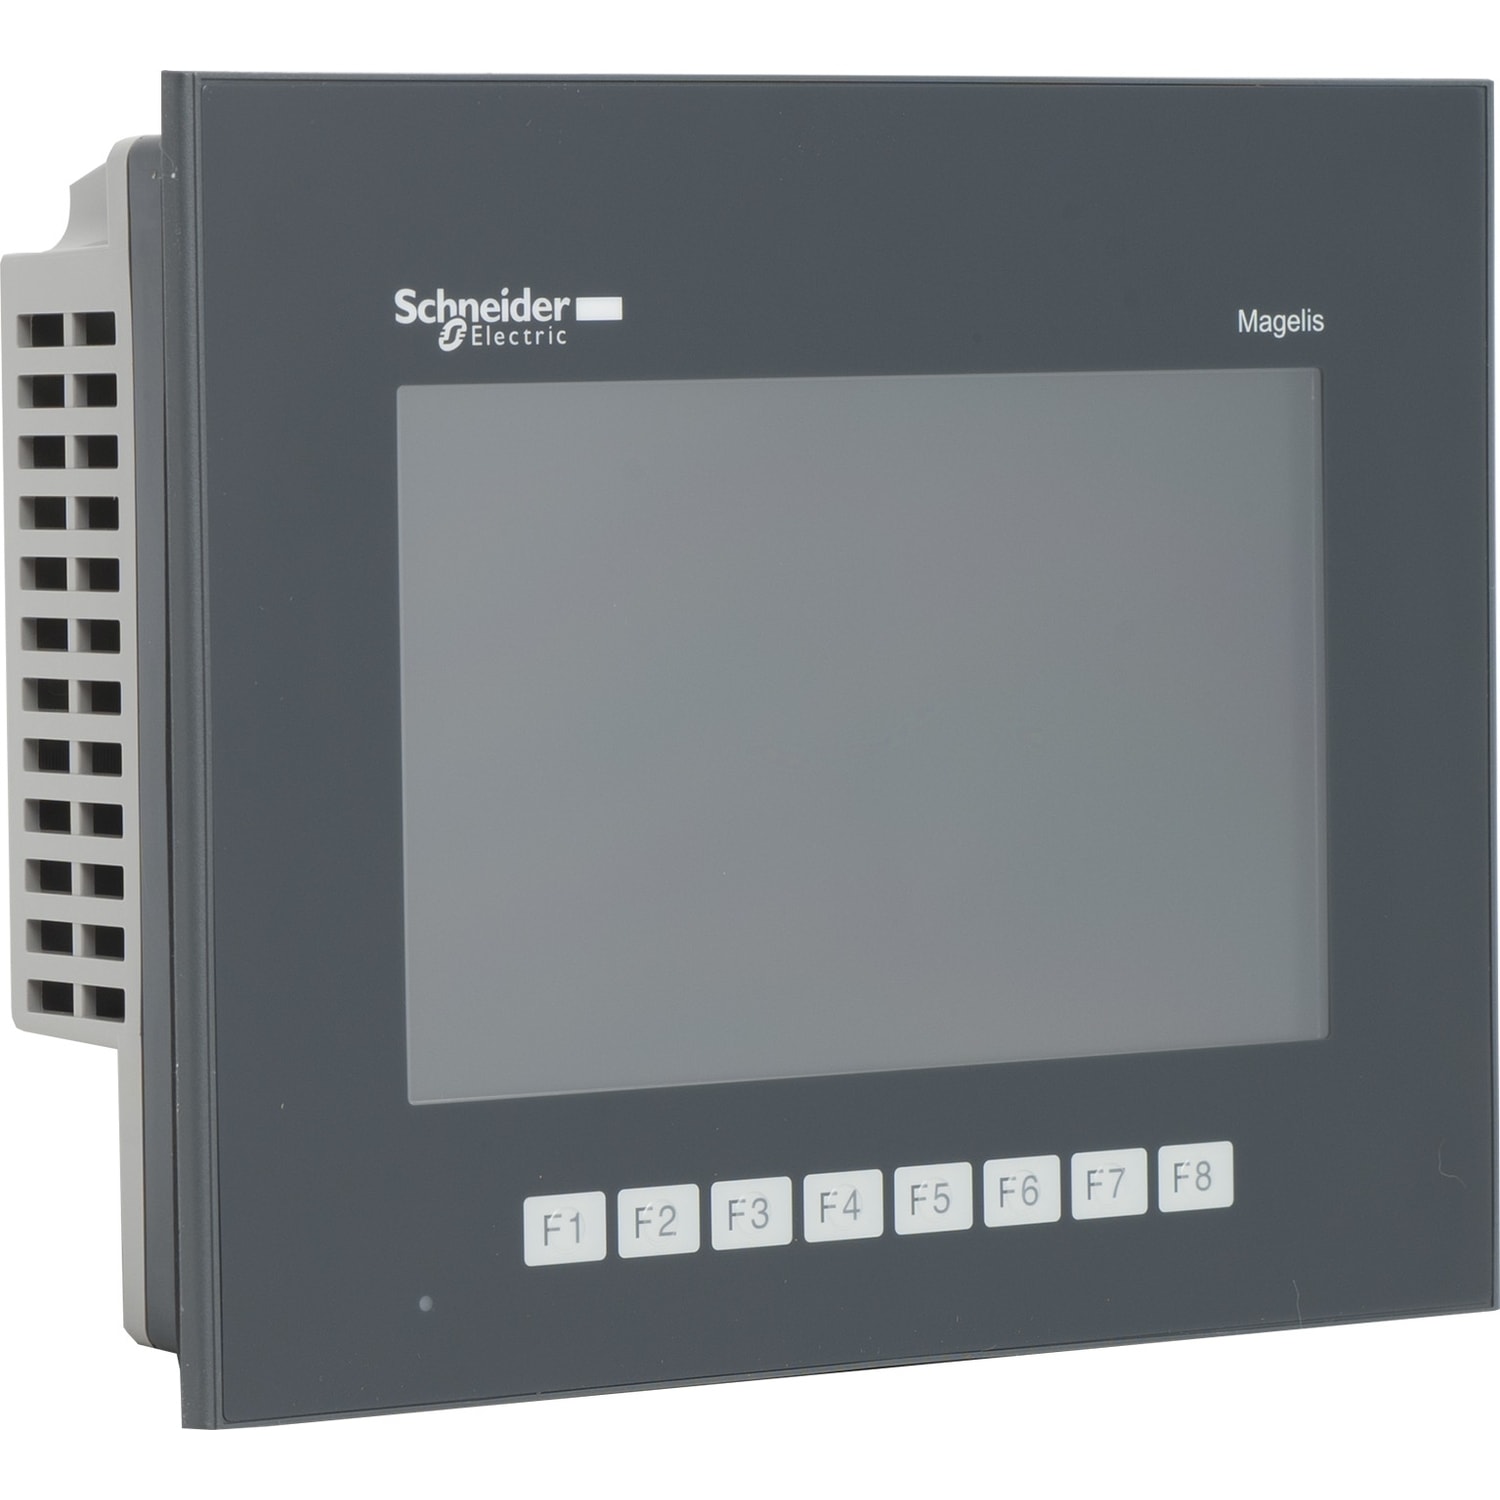 Schneider Electric - Harmony GTO - terminal IHM tactile - 800x480 pixels WVGA - 7,0p W TFT - 96MB